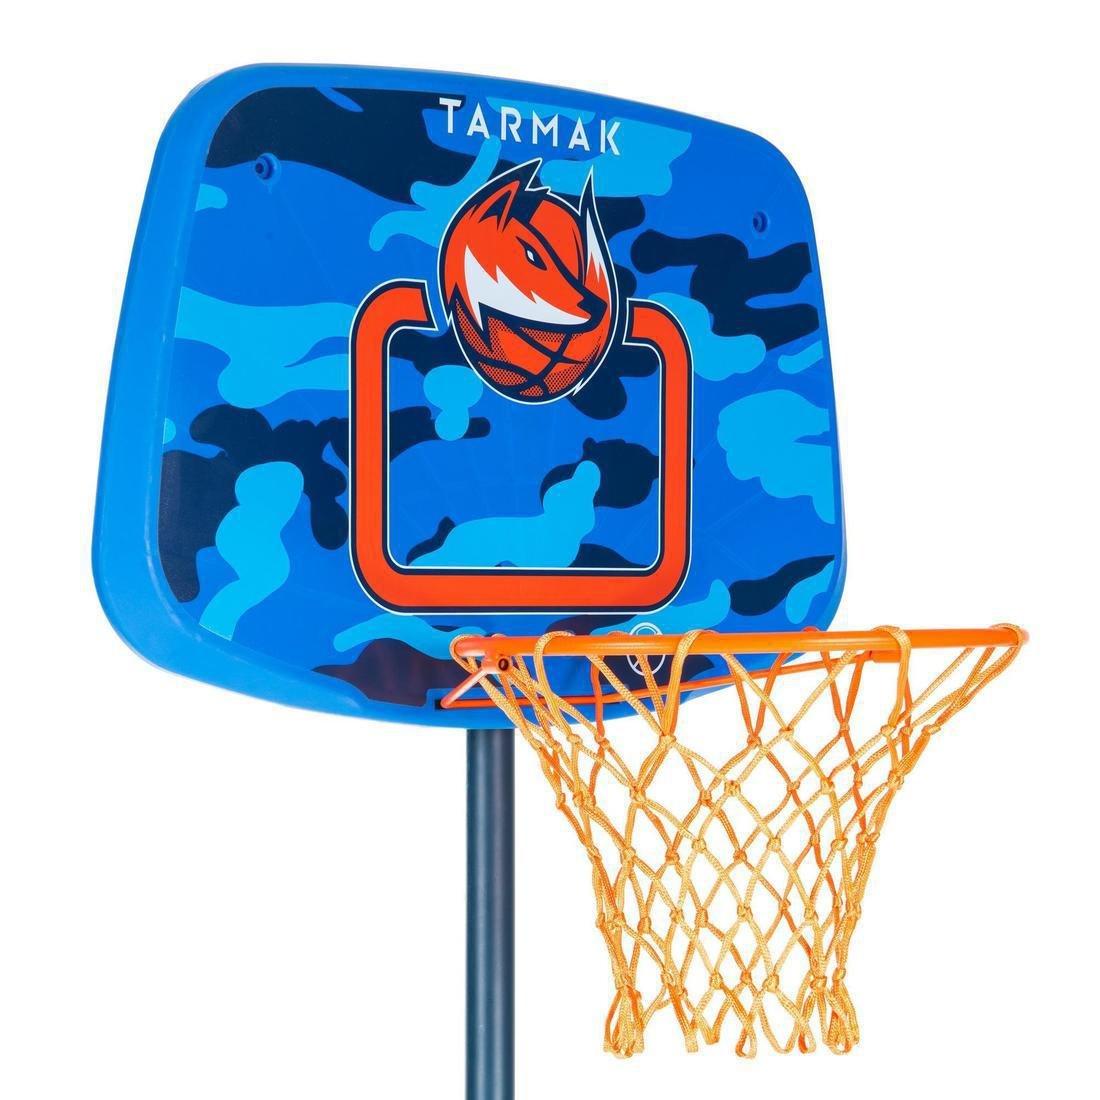 TARMAK - Unisex Kids Basketball - K500 (Up To Age 8), Blue